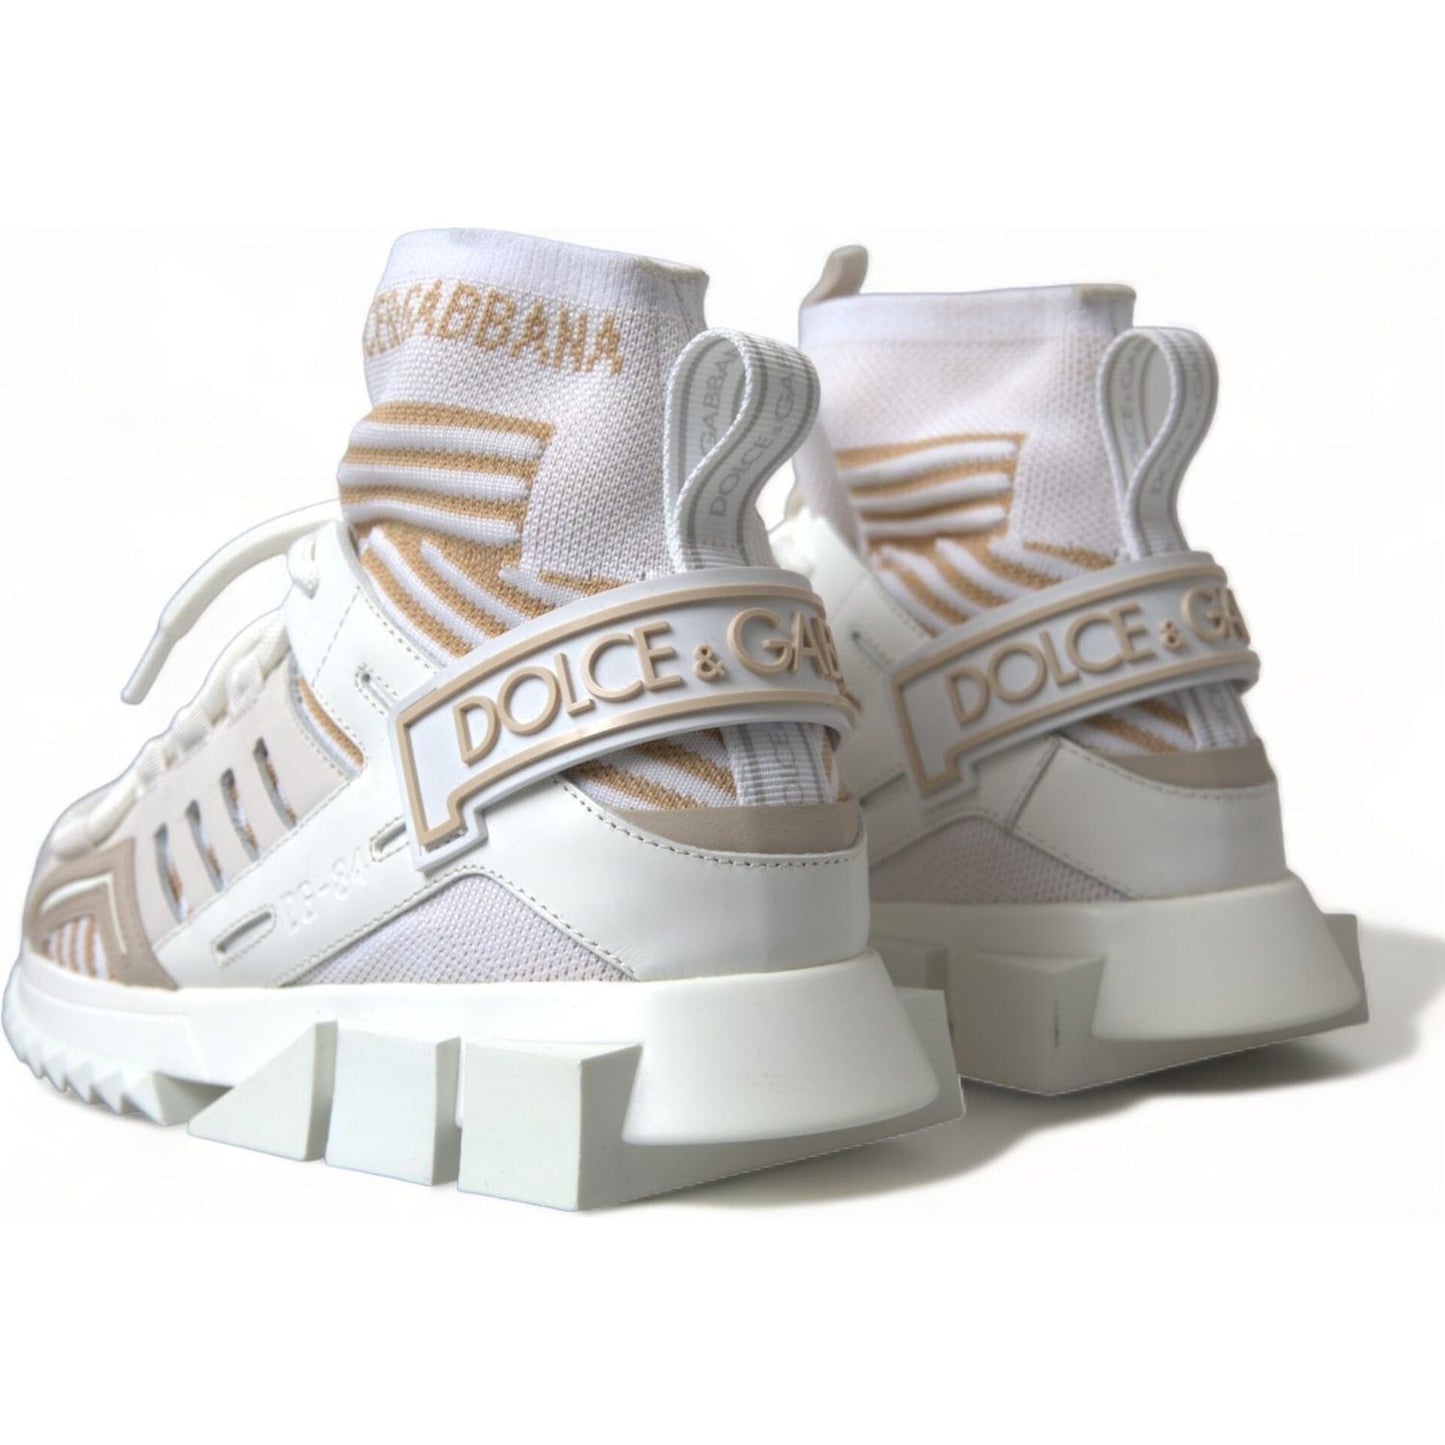 Dolce & Gabbana Elegant Sorrento Slip-On Sneakers in White and Beige white-beige-sorrento-socks-sneakers-shoes-1 465A2445-BG-scaled-27f5bf9b-d15.jpg